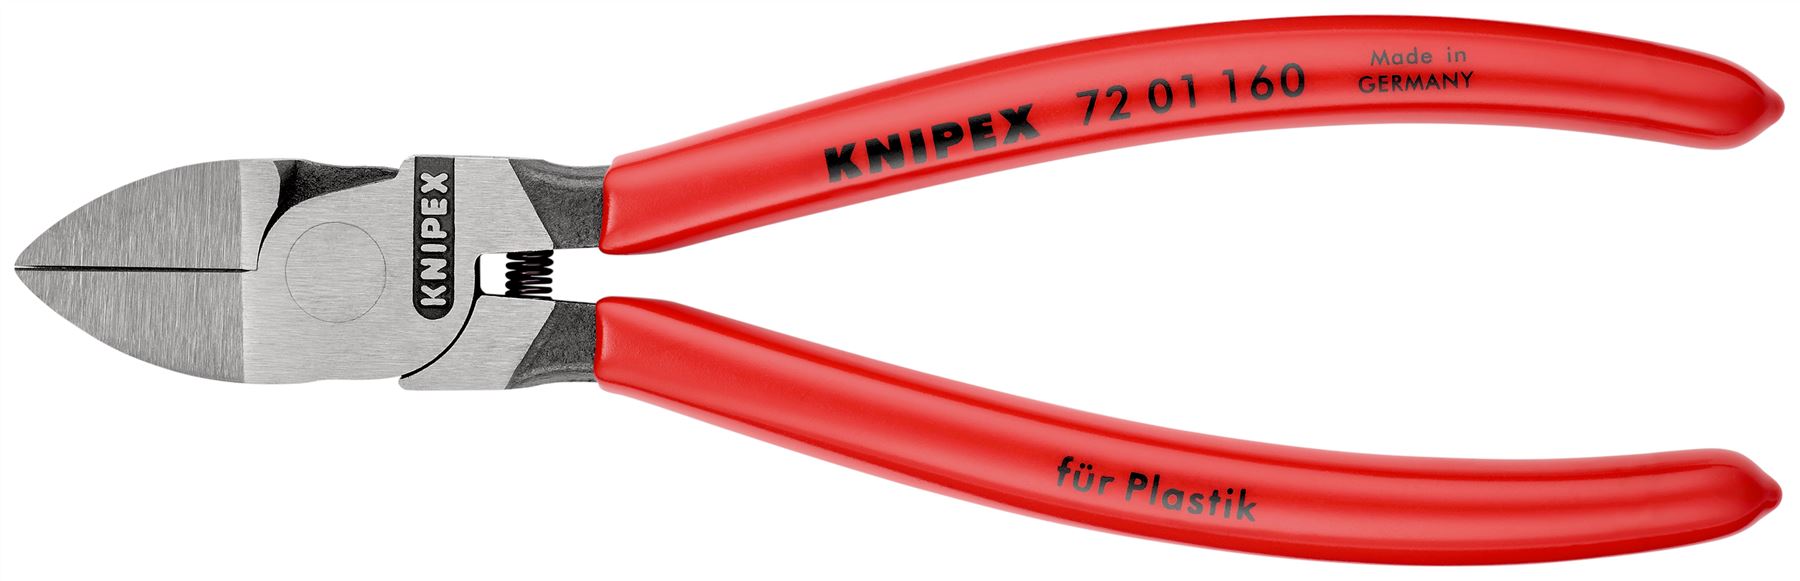 Knipex Cutting Pliers 160mm Diagonal Cutters for Plastics 72 01 160